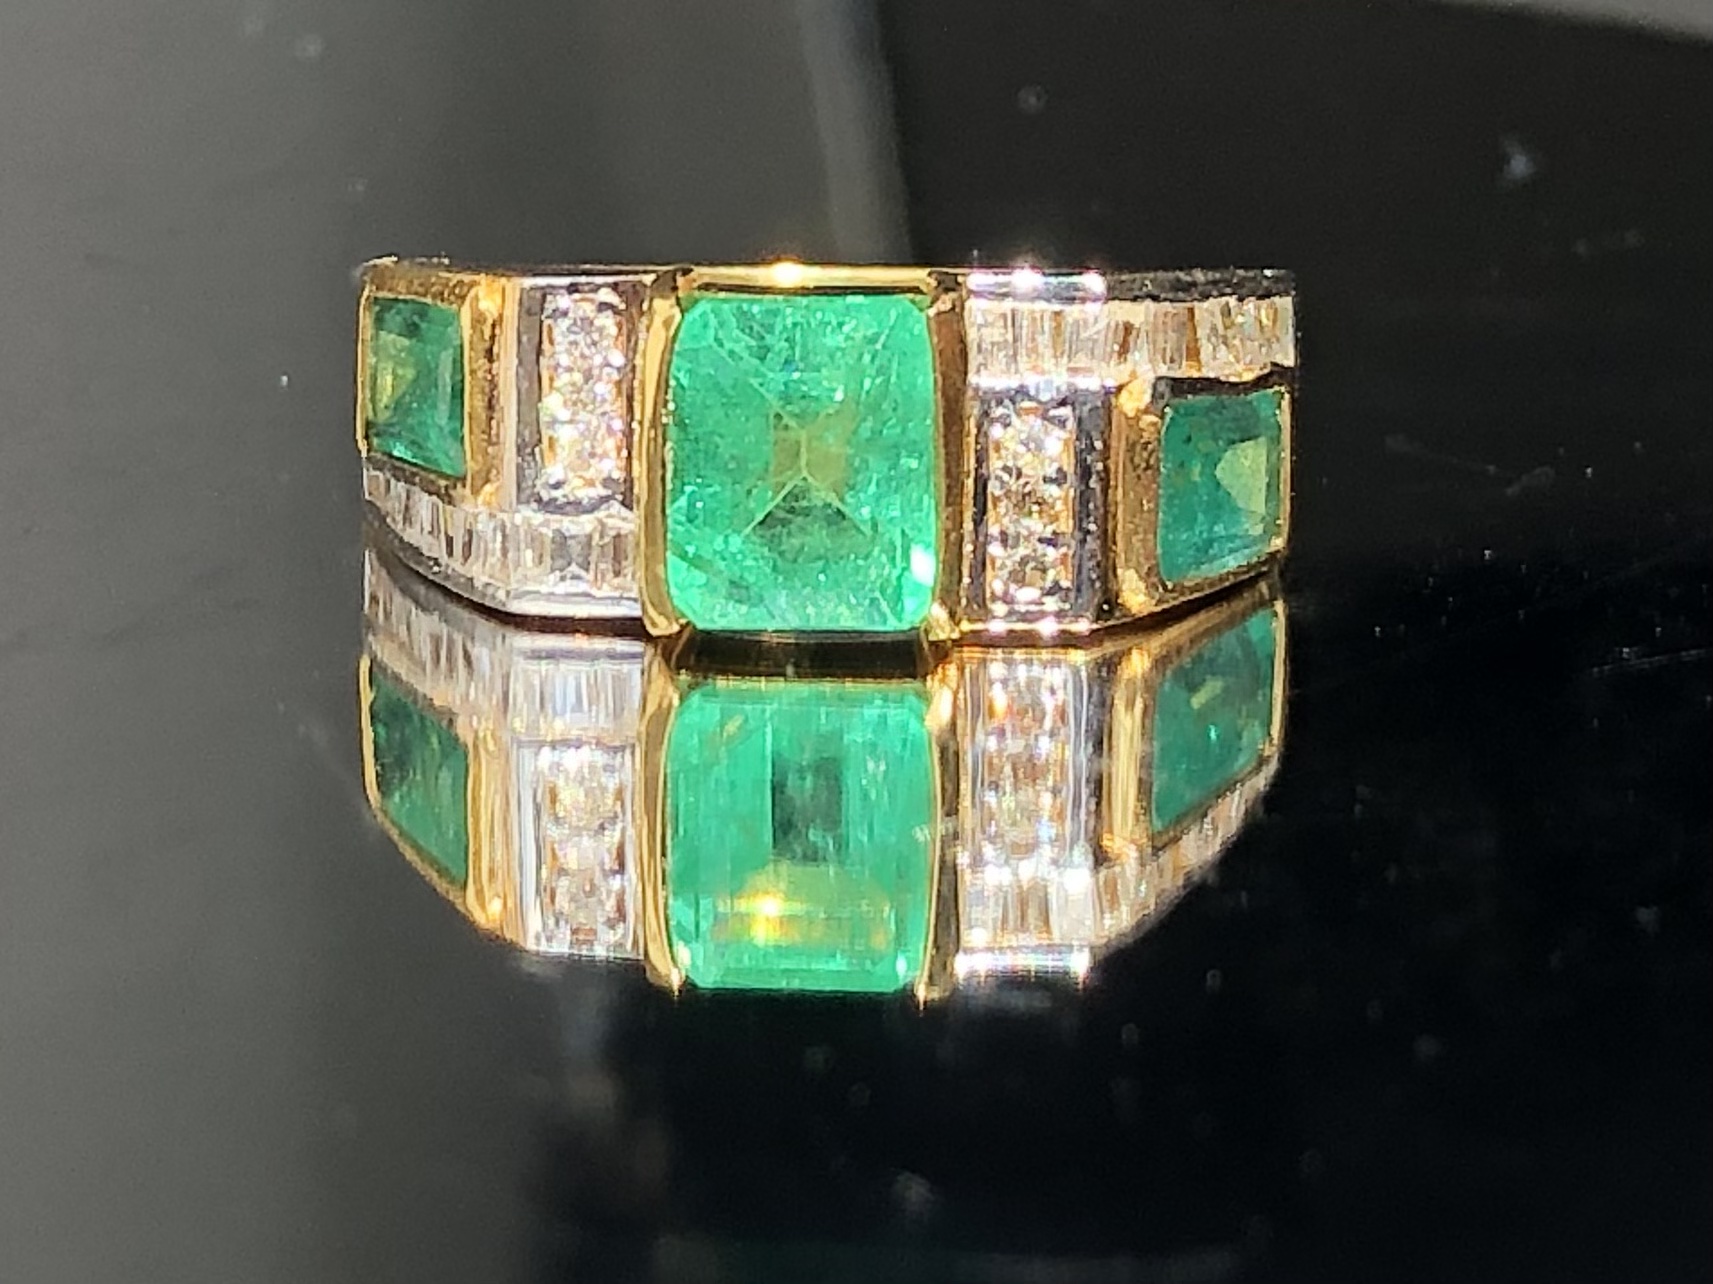 Beautiful 2.80 Carat Natural Emerald Ring With Natural Diamonds and 18k Gold - Image 2 of 7